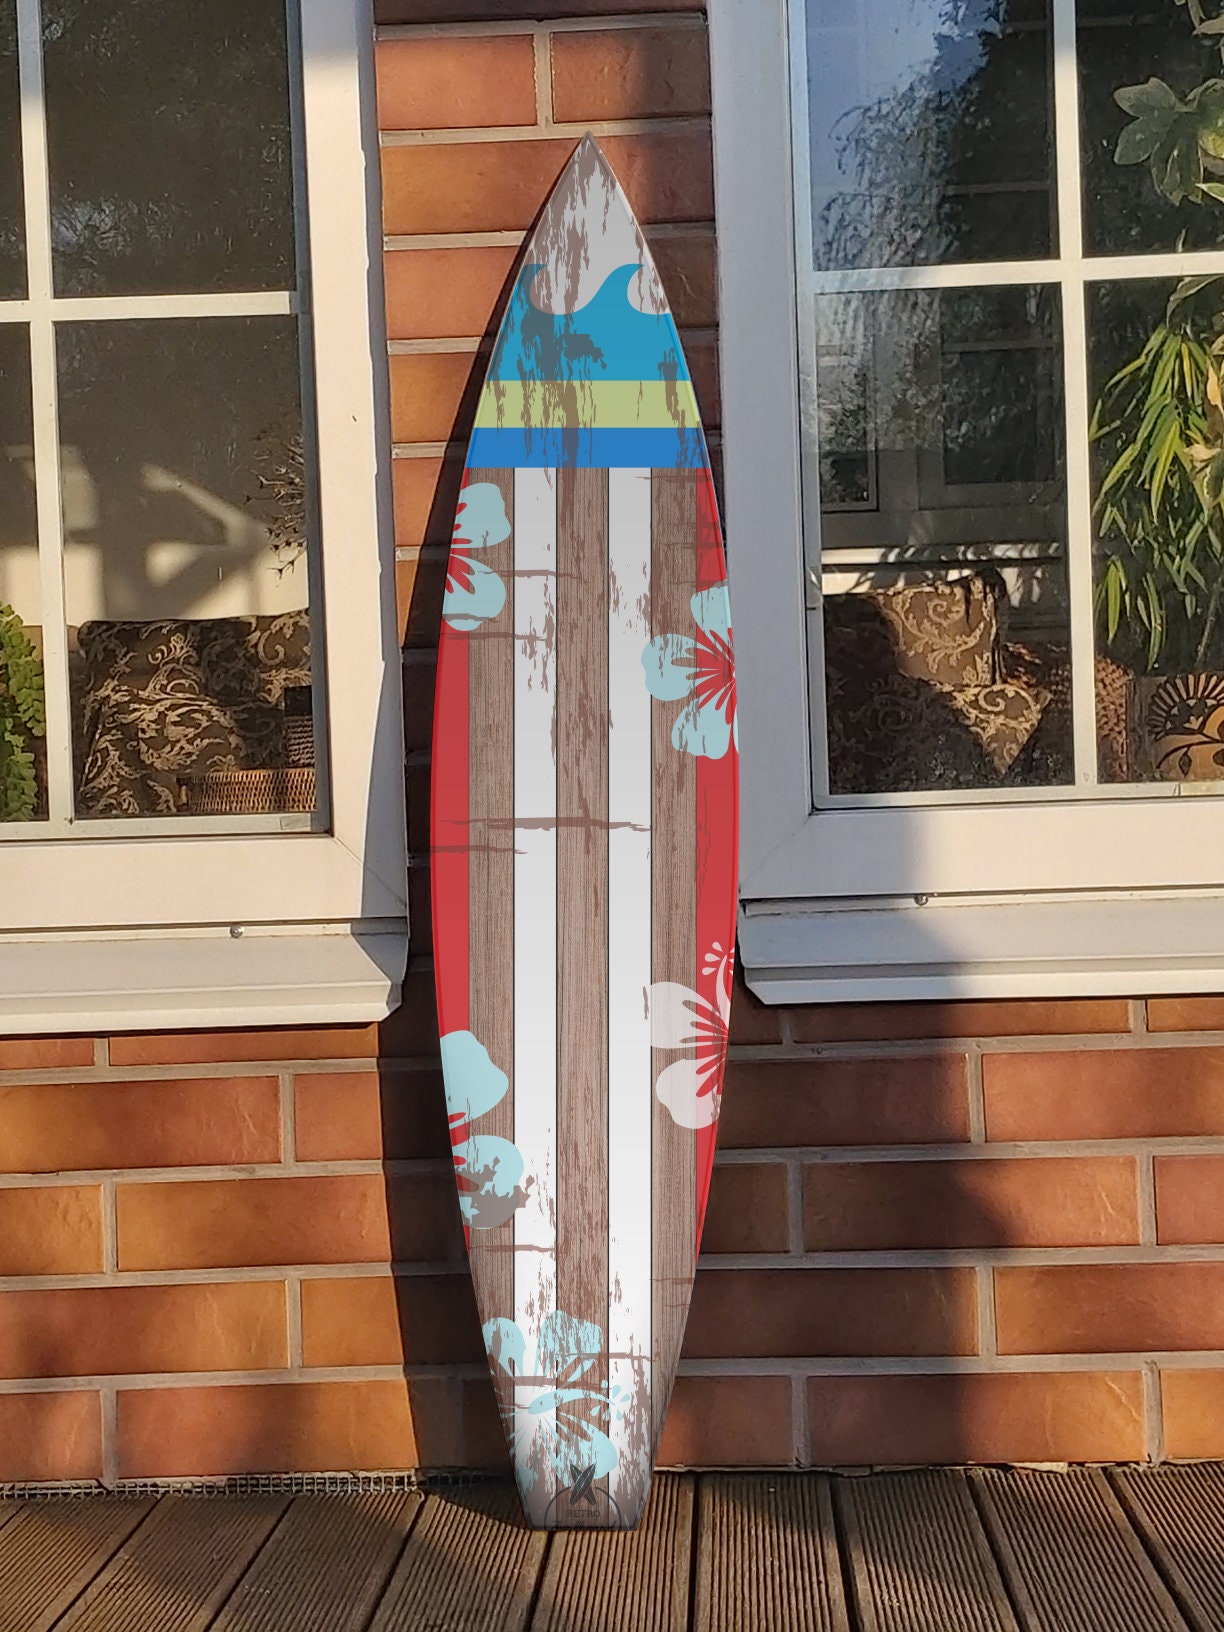 Rustic Surfboard Wall Art with Turtle, Surfers gift, Tropical Decor, Bar Decor, Beach Decor